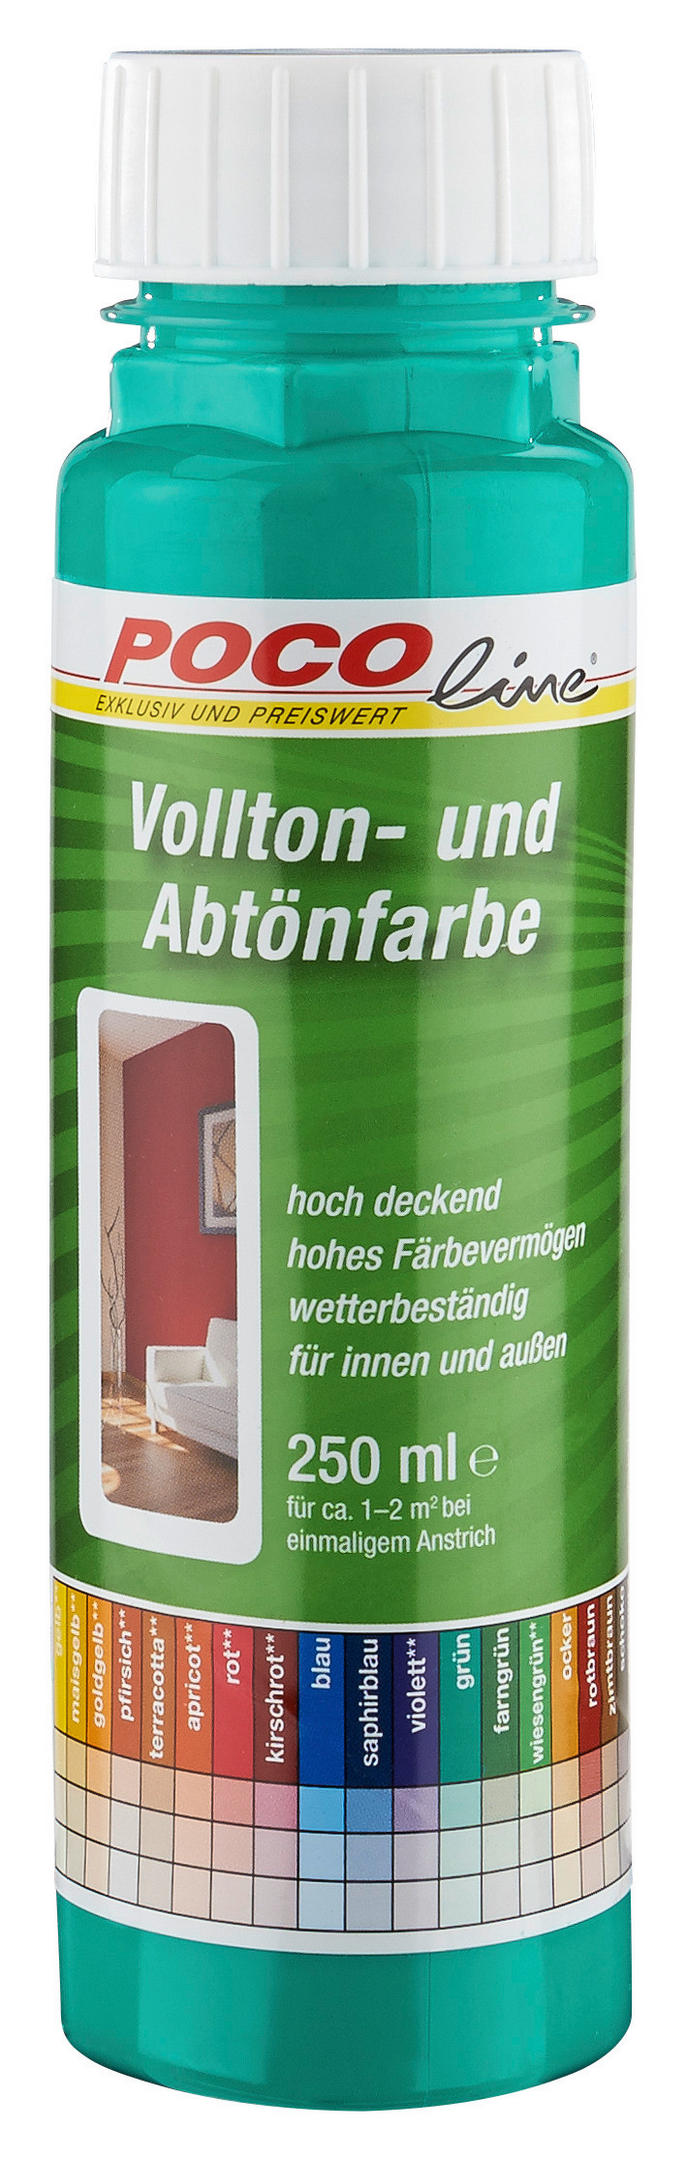 POCOline Vollton- und Abtönfarbe grün ca. 0,25 l Voll+Abtönfarbe 250ml grün - grün (250ml) - POCOline